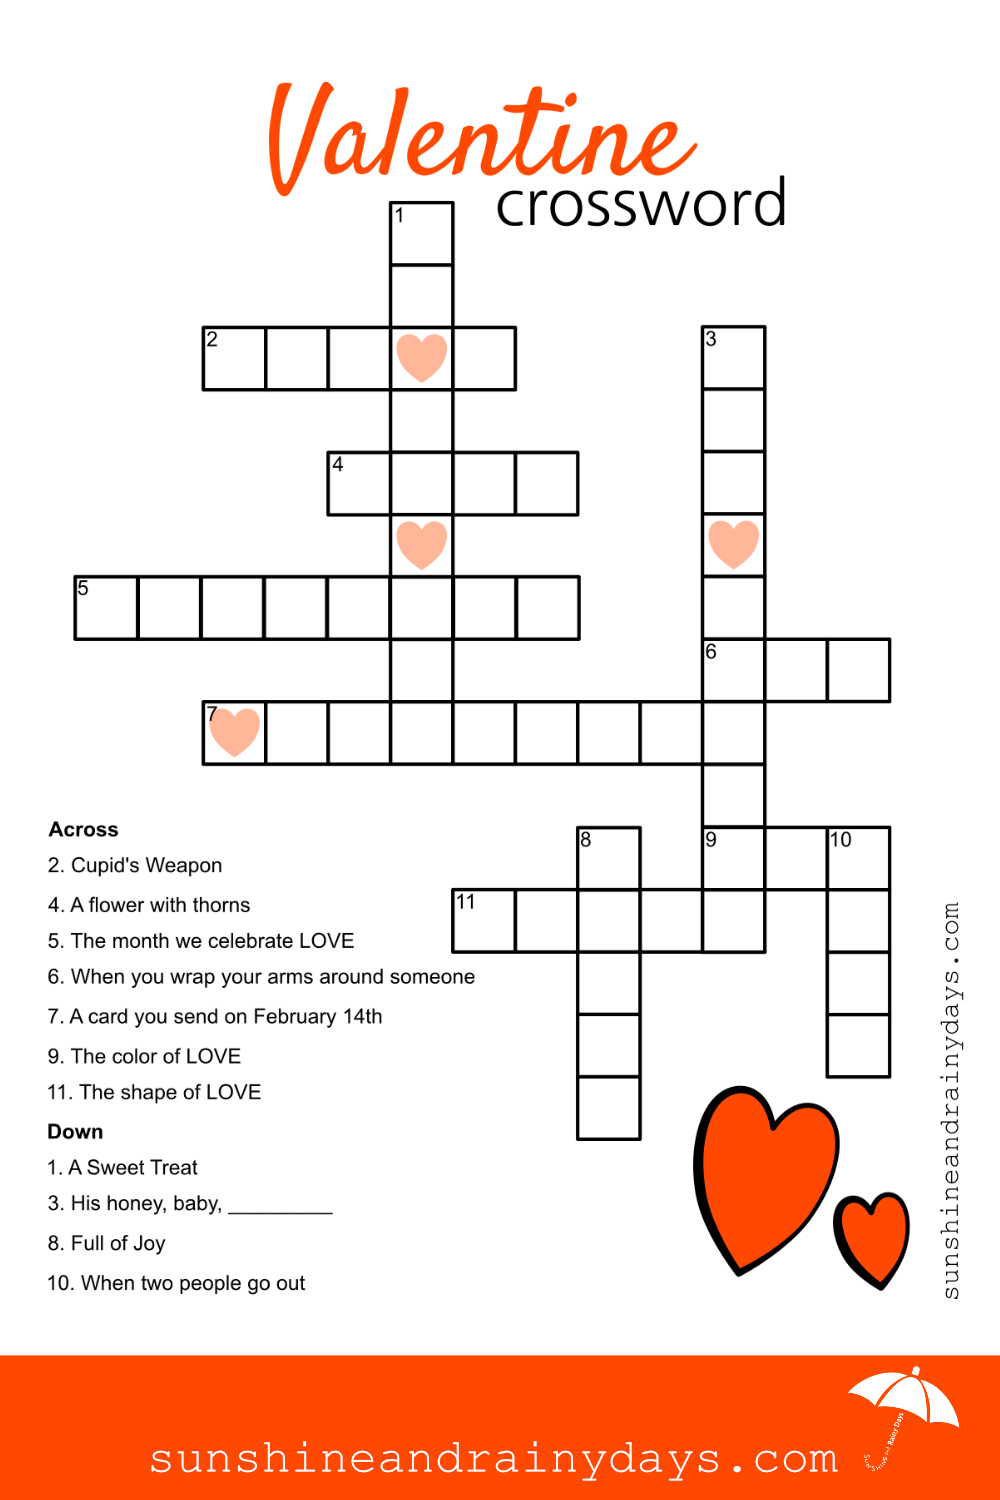 Valentine Crossword Puzzle - Sunshine And Rainy Days - Free Printable Valentine Crossword Puzzles